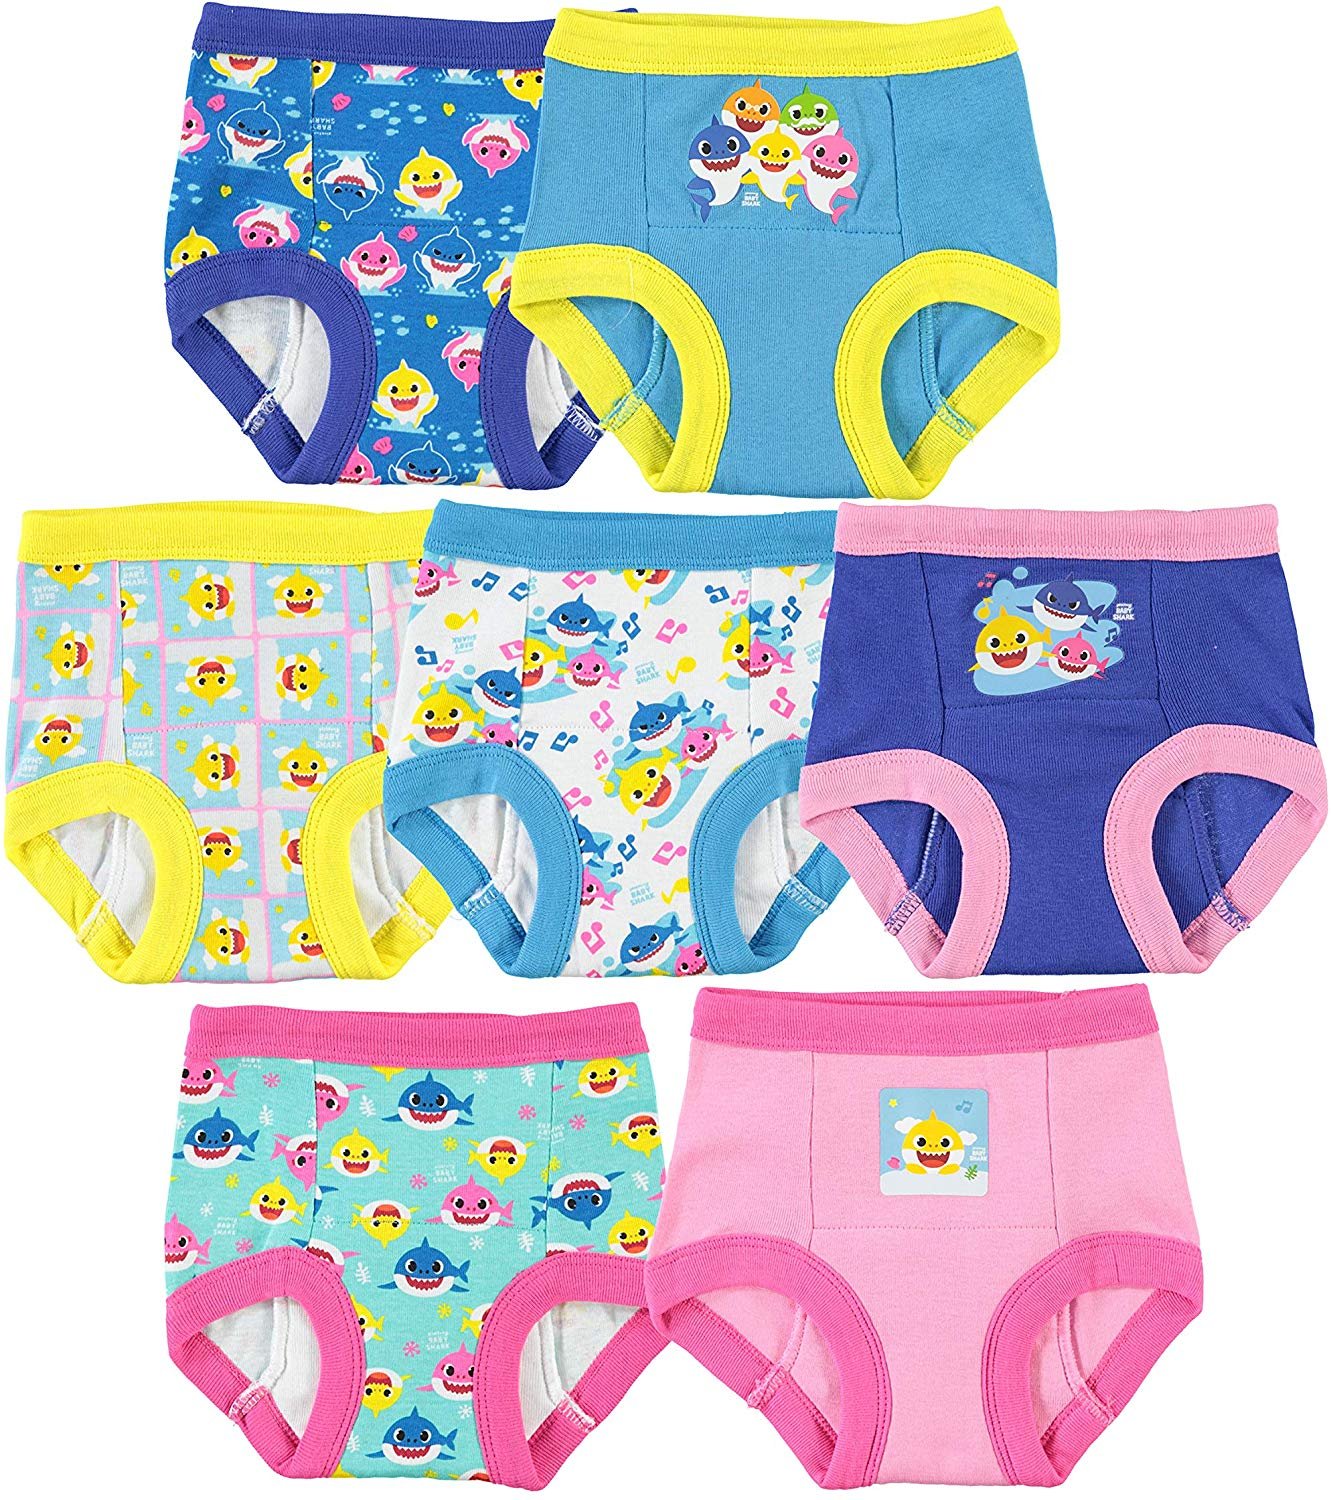 Girls Potty Training Pants Underwear 4 Pack Size 12M -2T | eBay